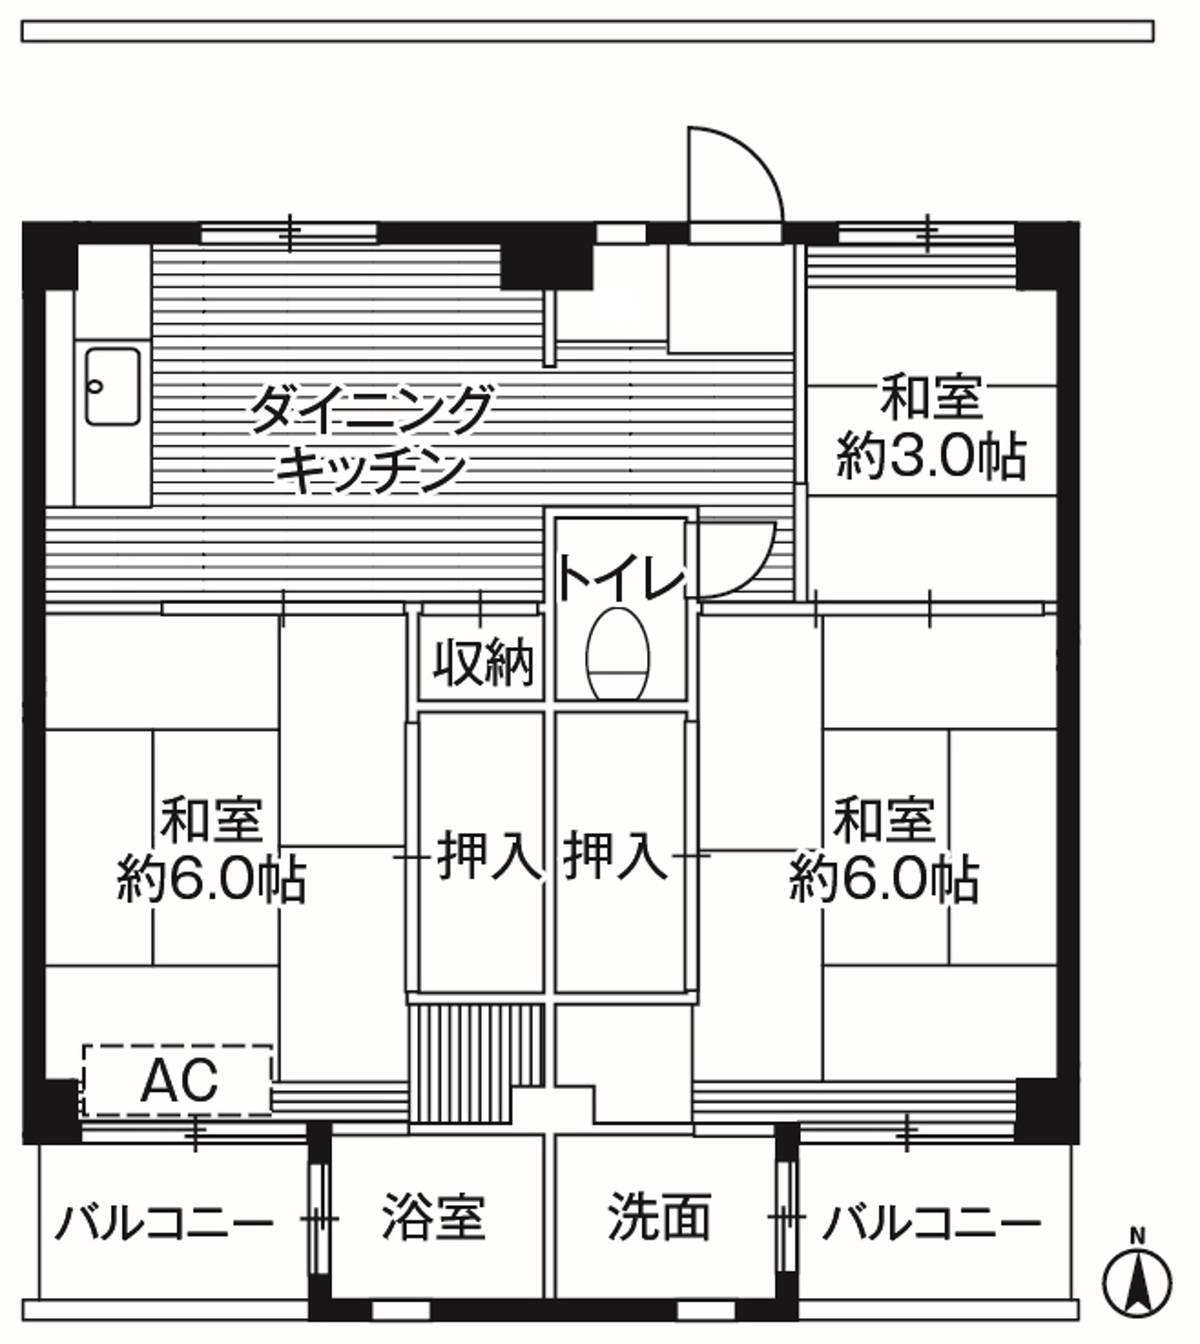 3DK floorplan of Village House Uraga in Yokosuka-shi